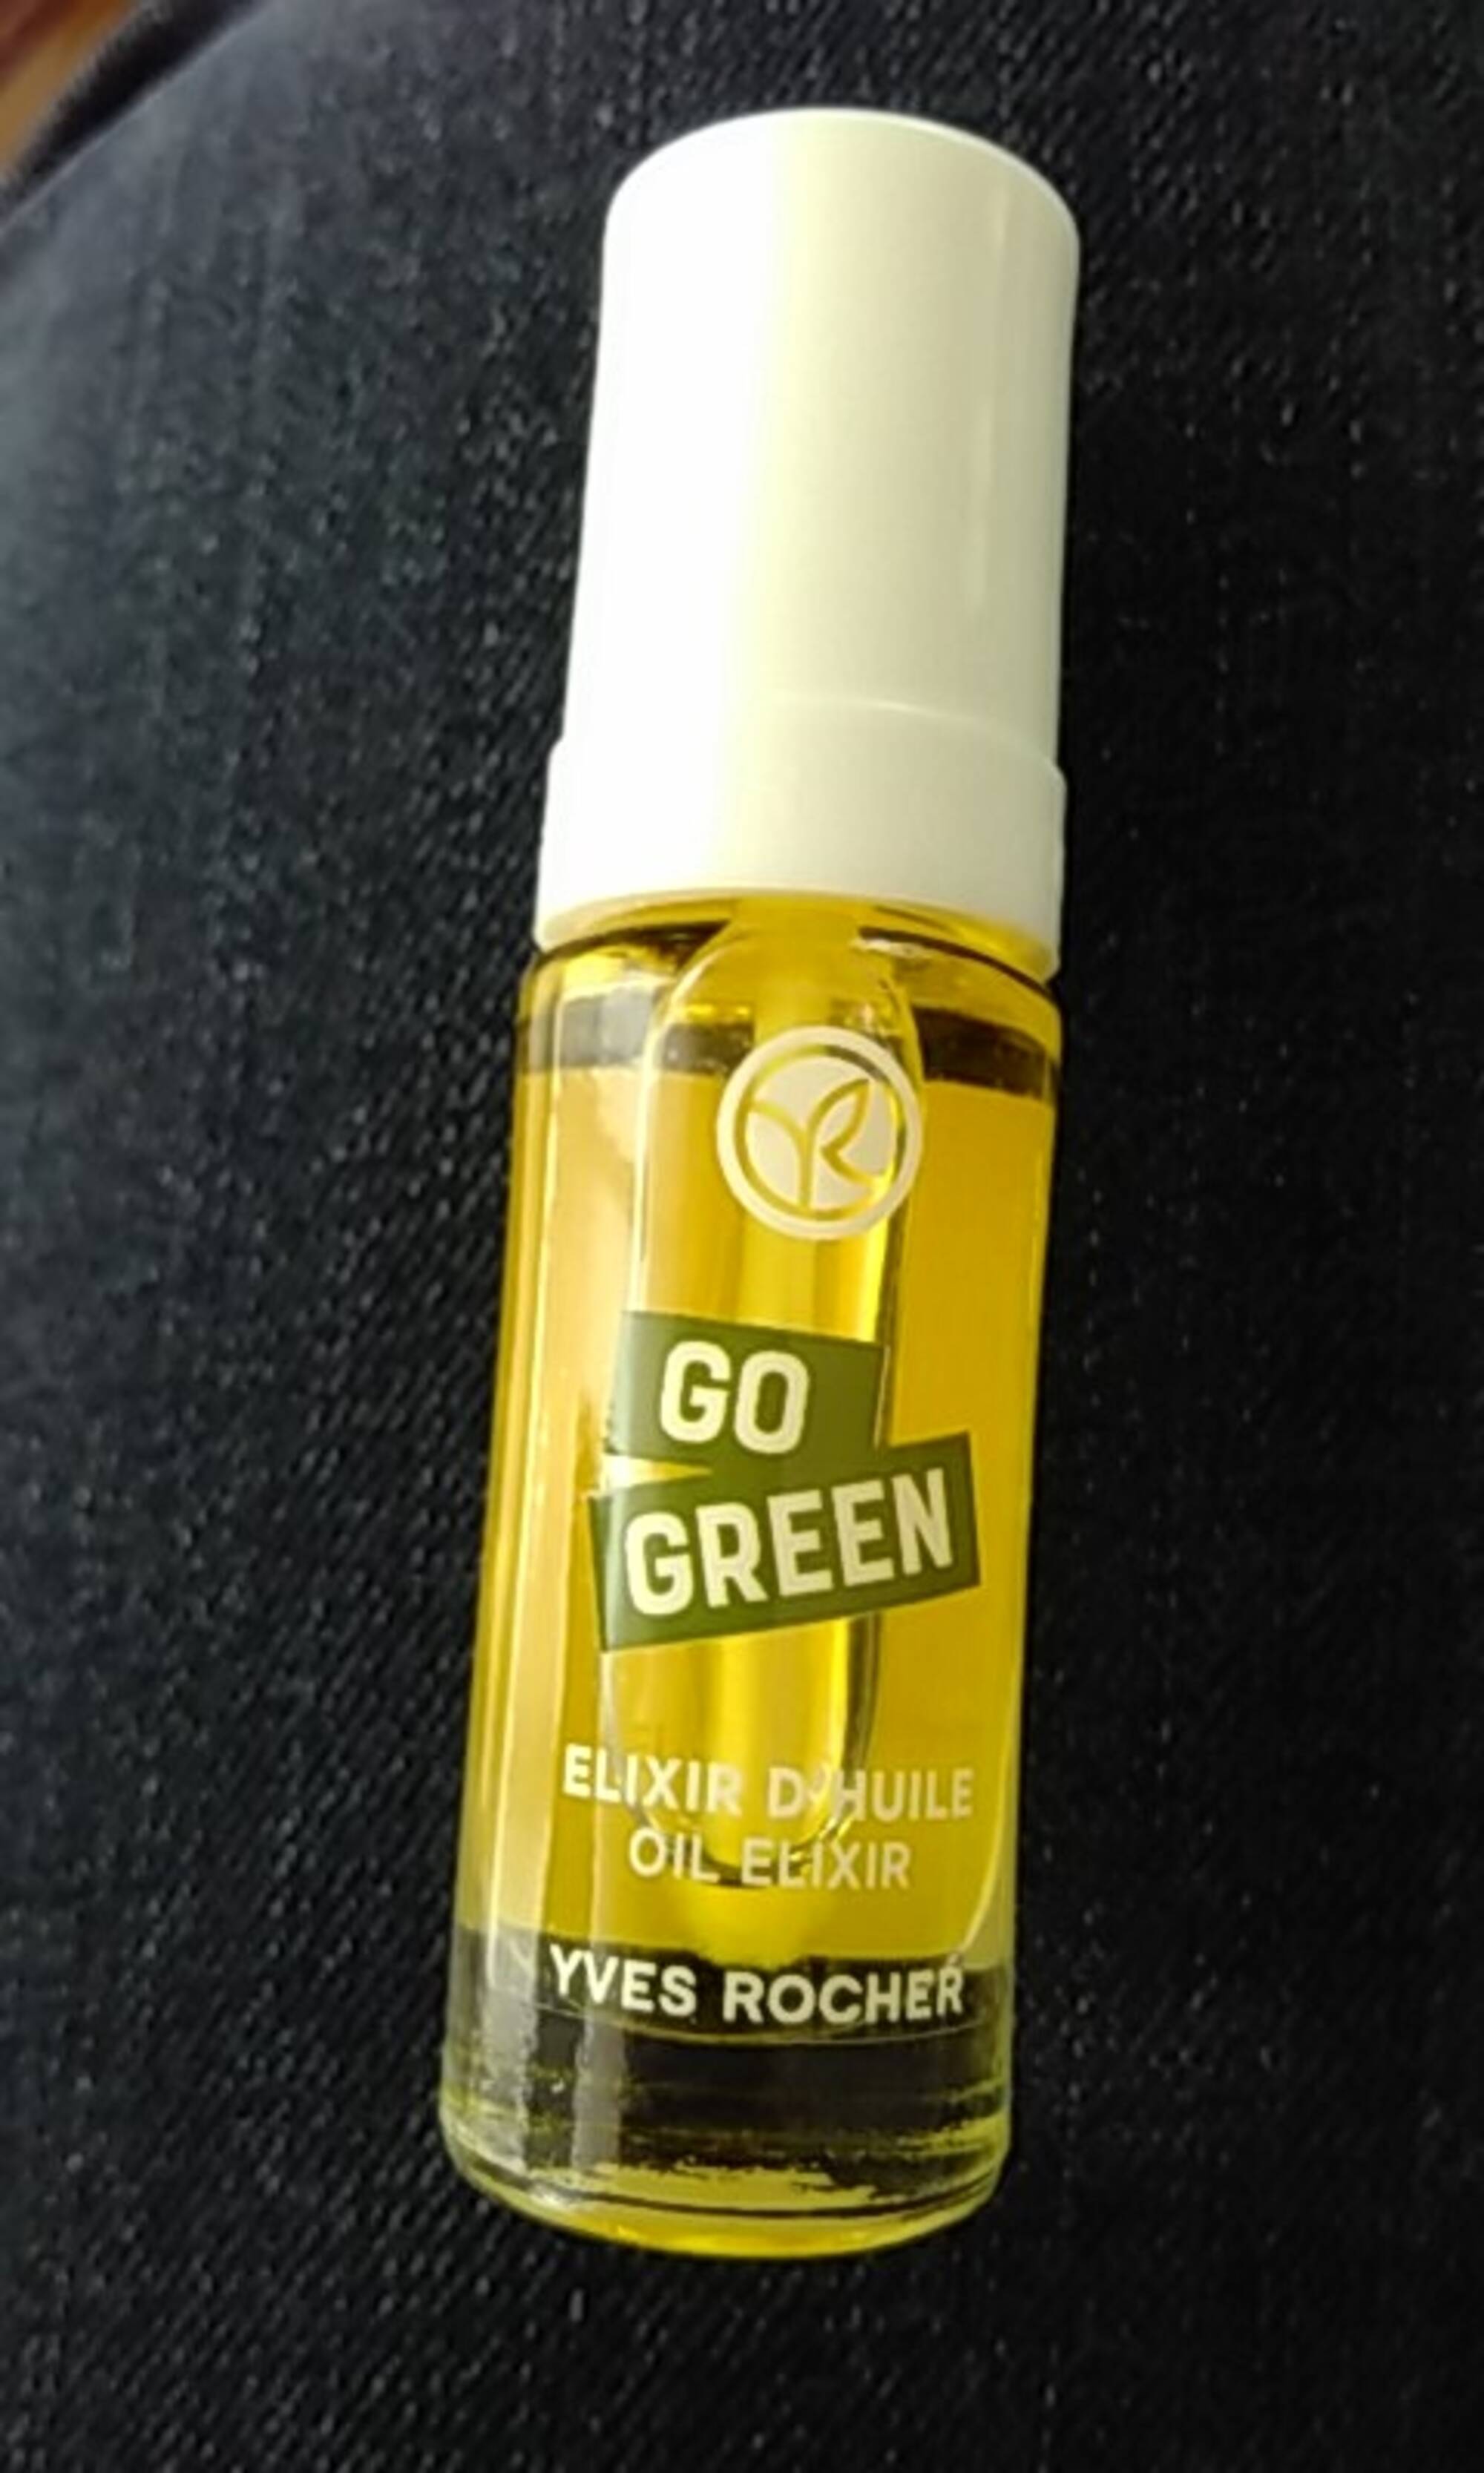 YVES ROCHER - Go green - Elixir d'huile